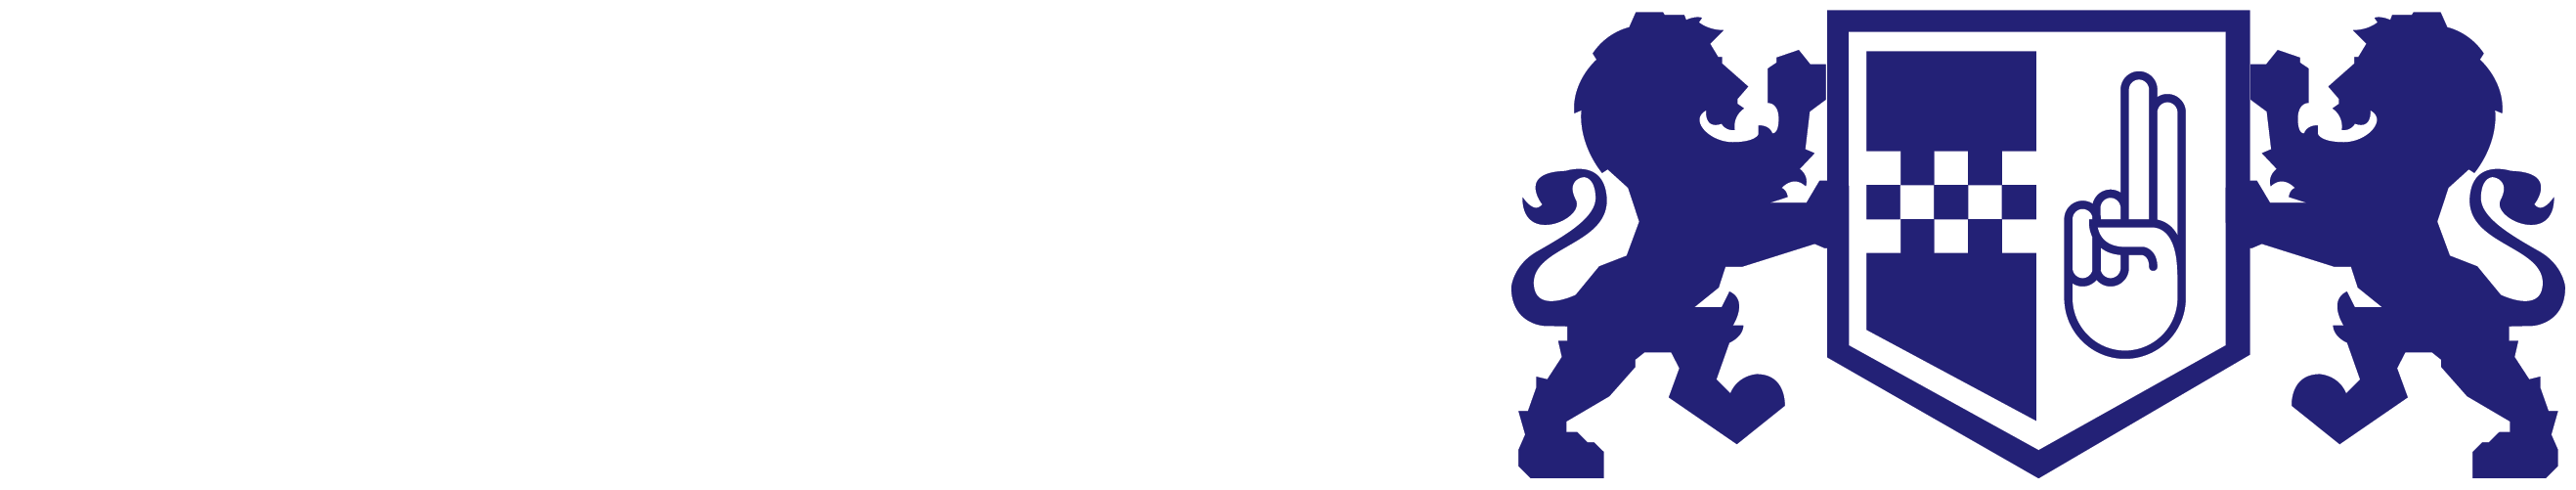 Boyd Group Dumfries logo